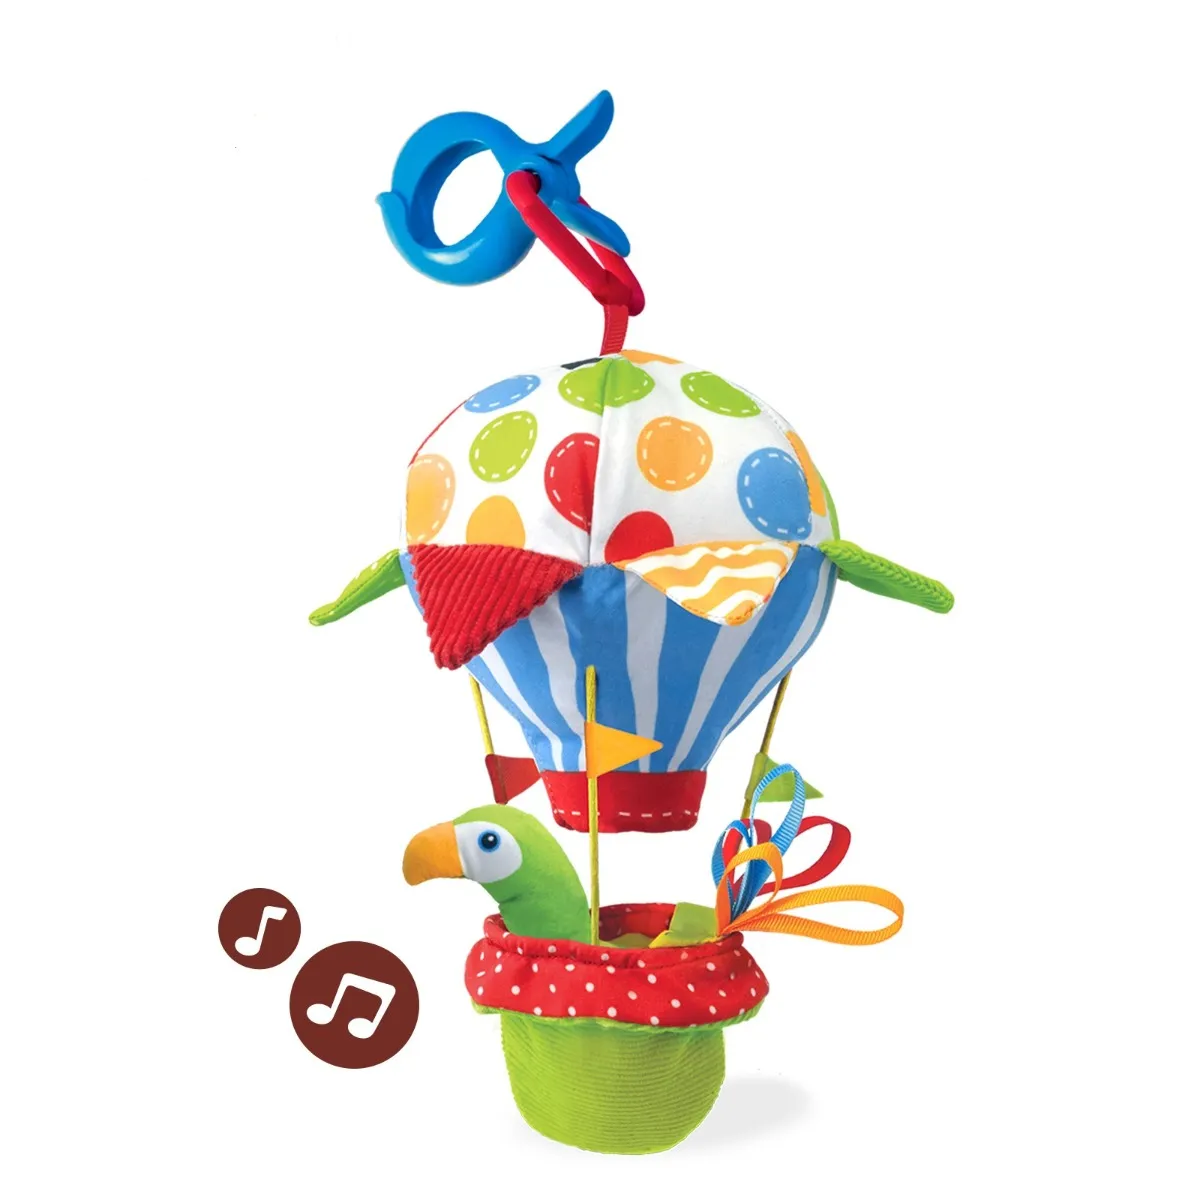 Jucarie balon muzical cu activitati pentru +0 luni 40140, 1 bucata, Yookidoo 